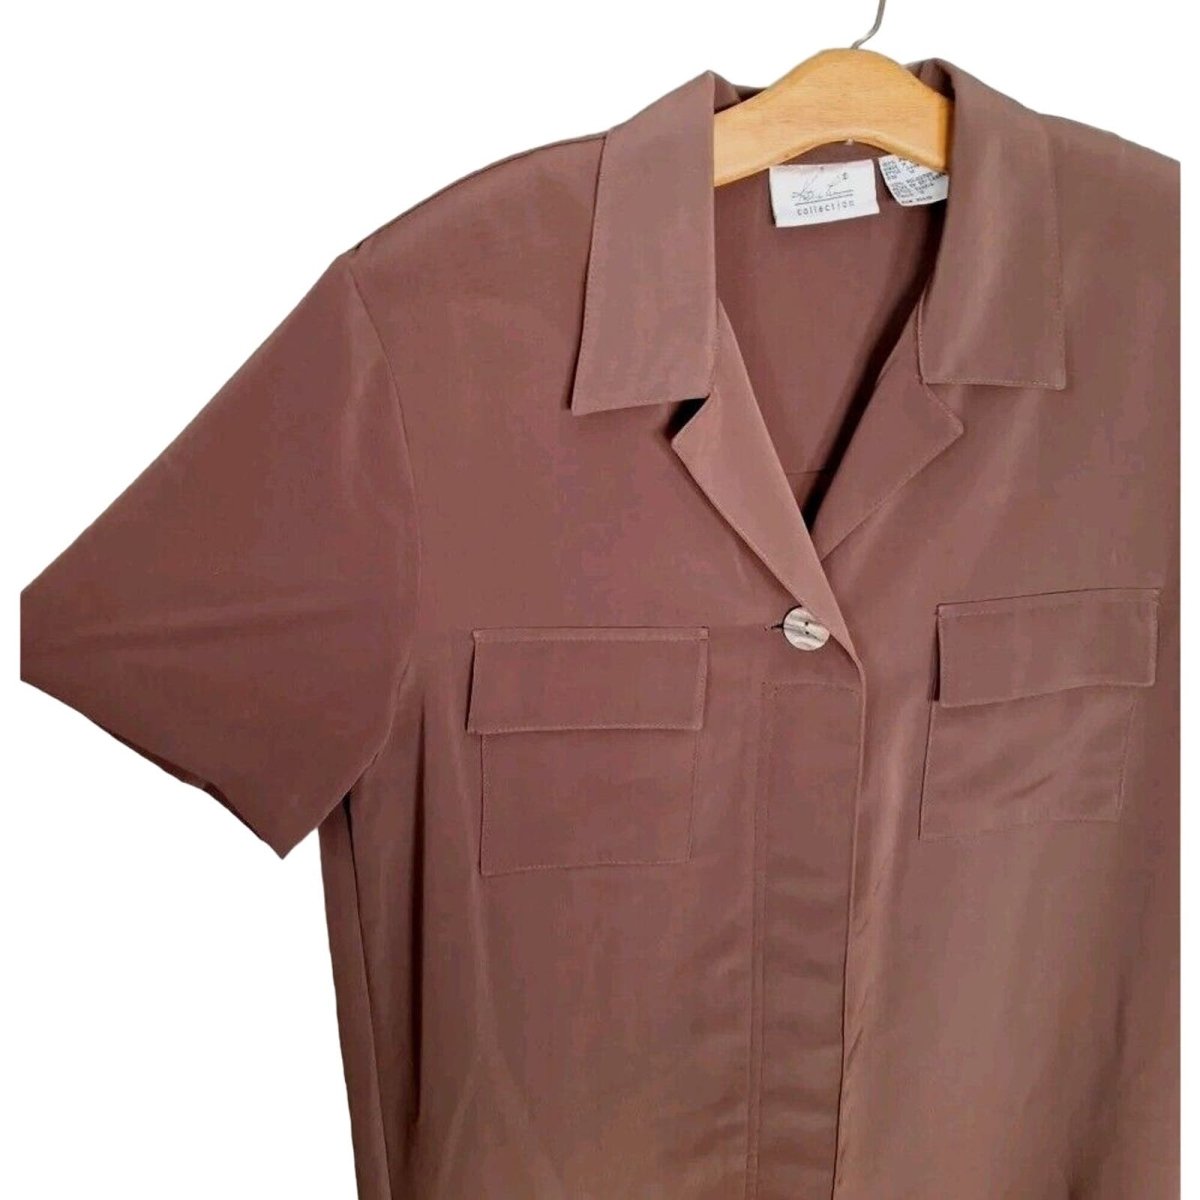 Vintage 80s/90s Brown Button Front Minimalist Shirt Dress Women Size Medium - themallvintage The Mall Vintage